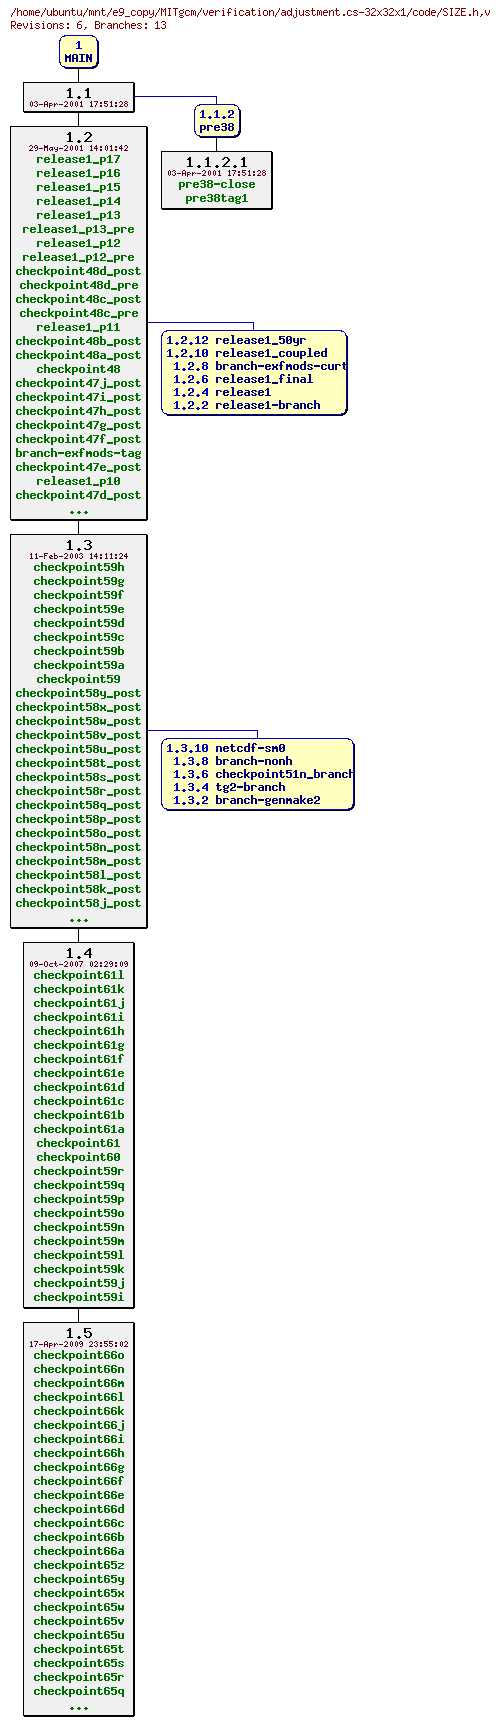 Revisions of MITgcm/verification/adjustment.cs-32x32x1/code/SIZE.h